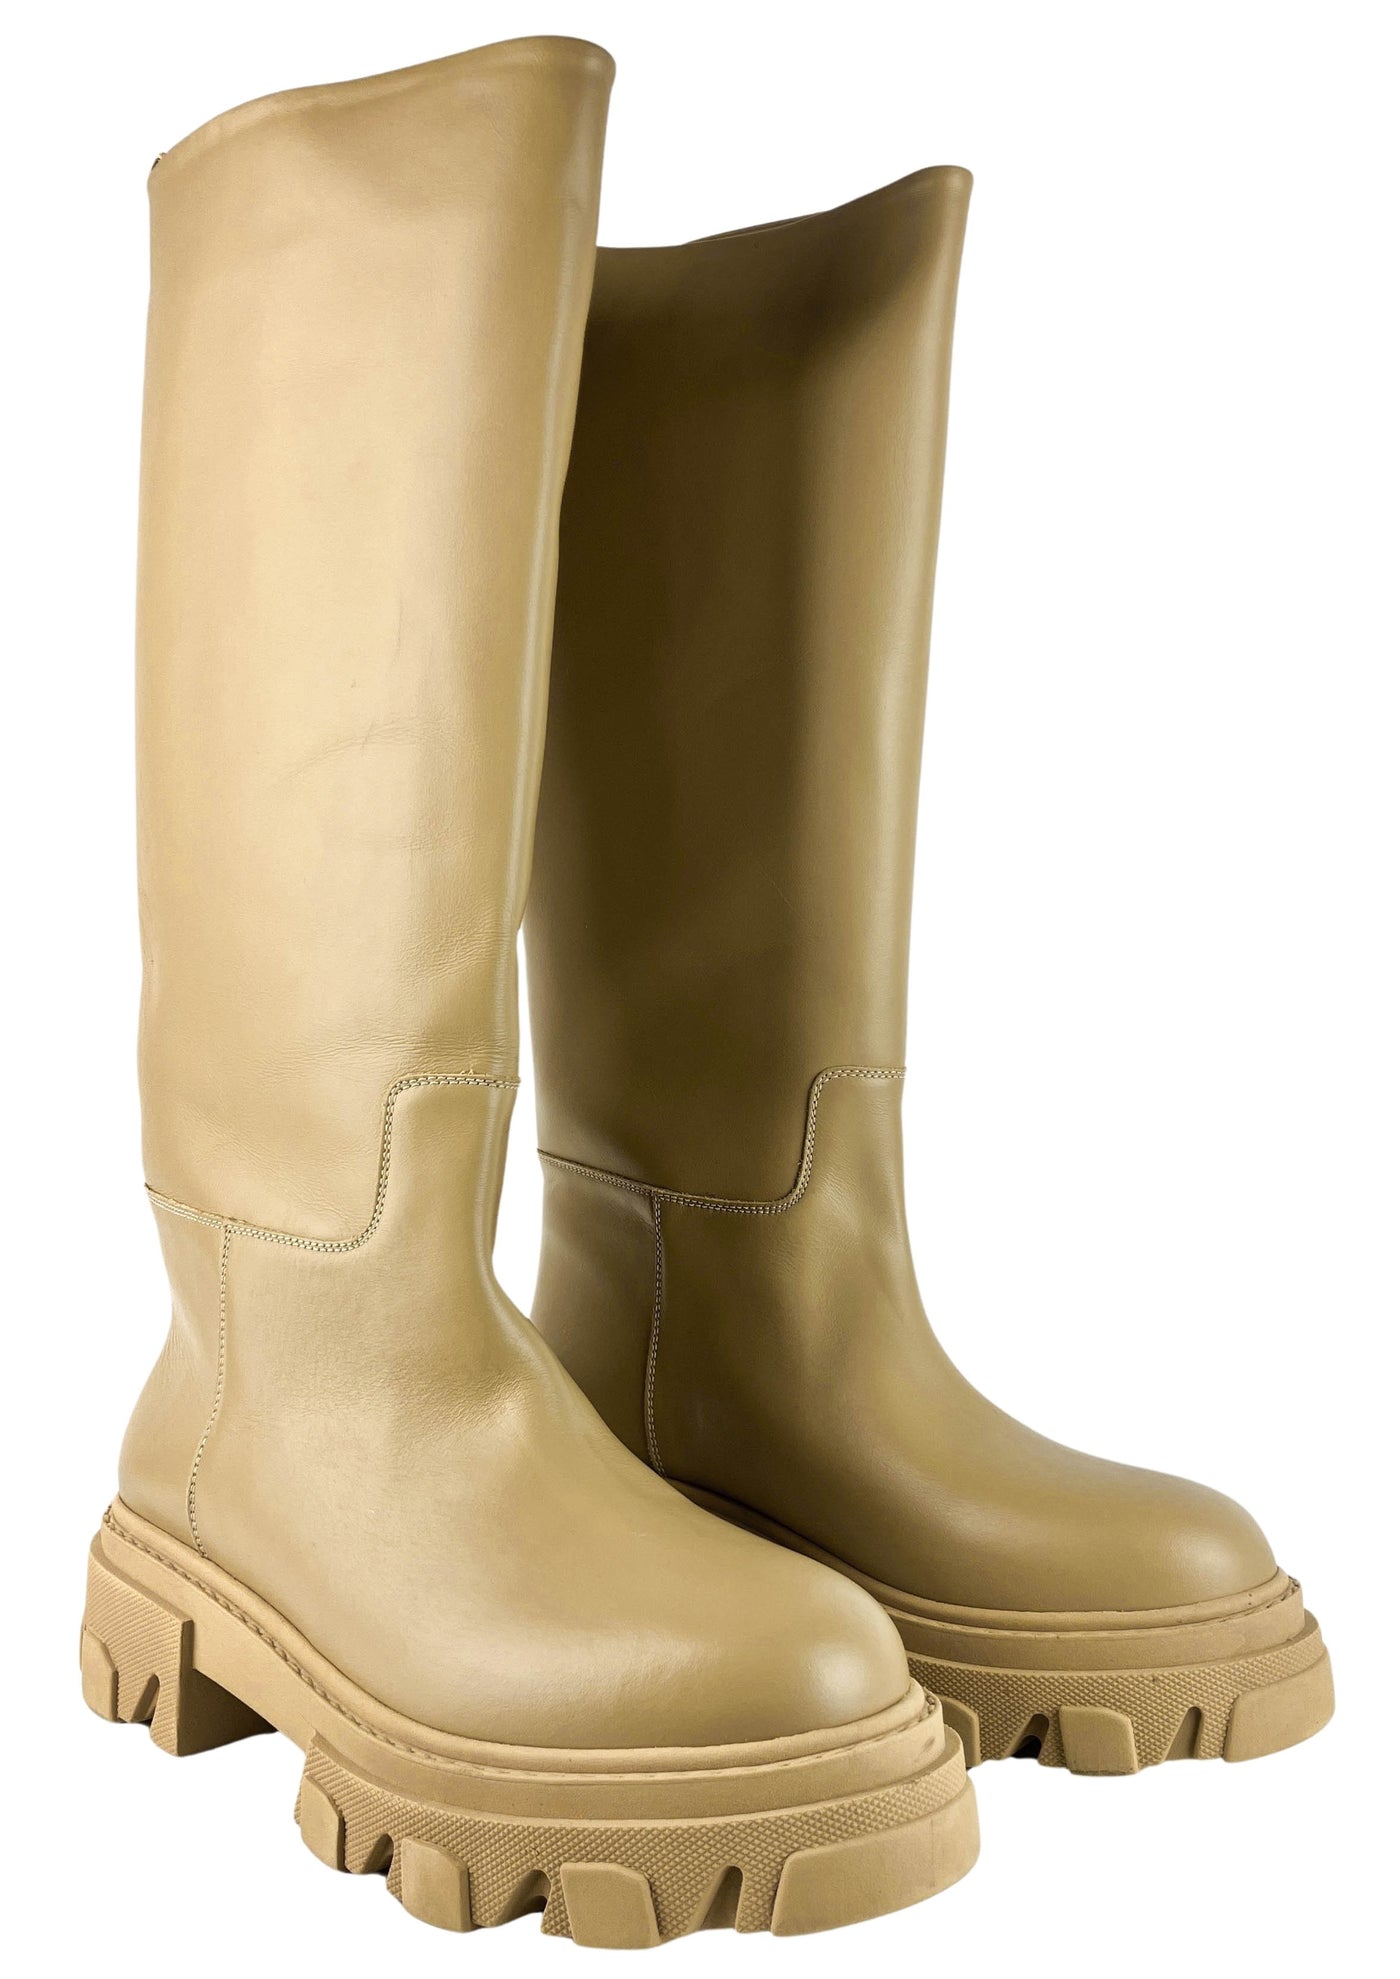 GIA X PERNILLE TEISBAEK Perni 07 Boots in Camel Beige - Discounts on Gia Borghini at UAL